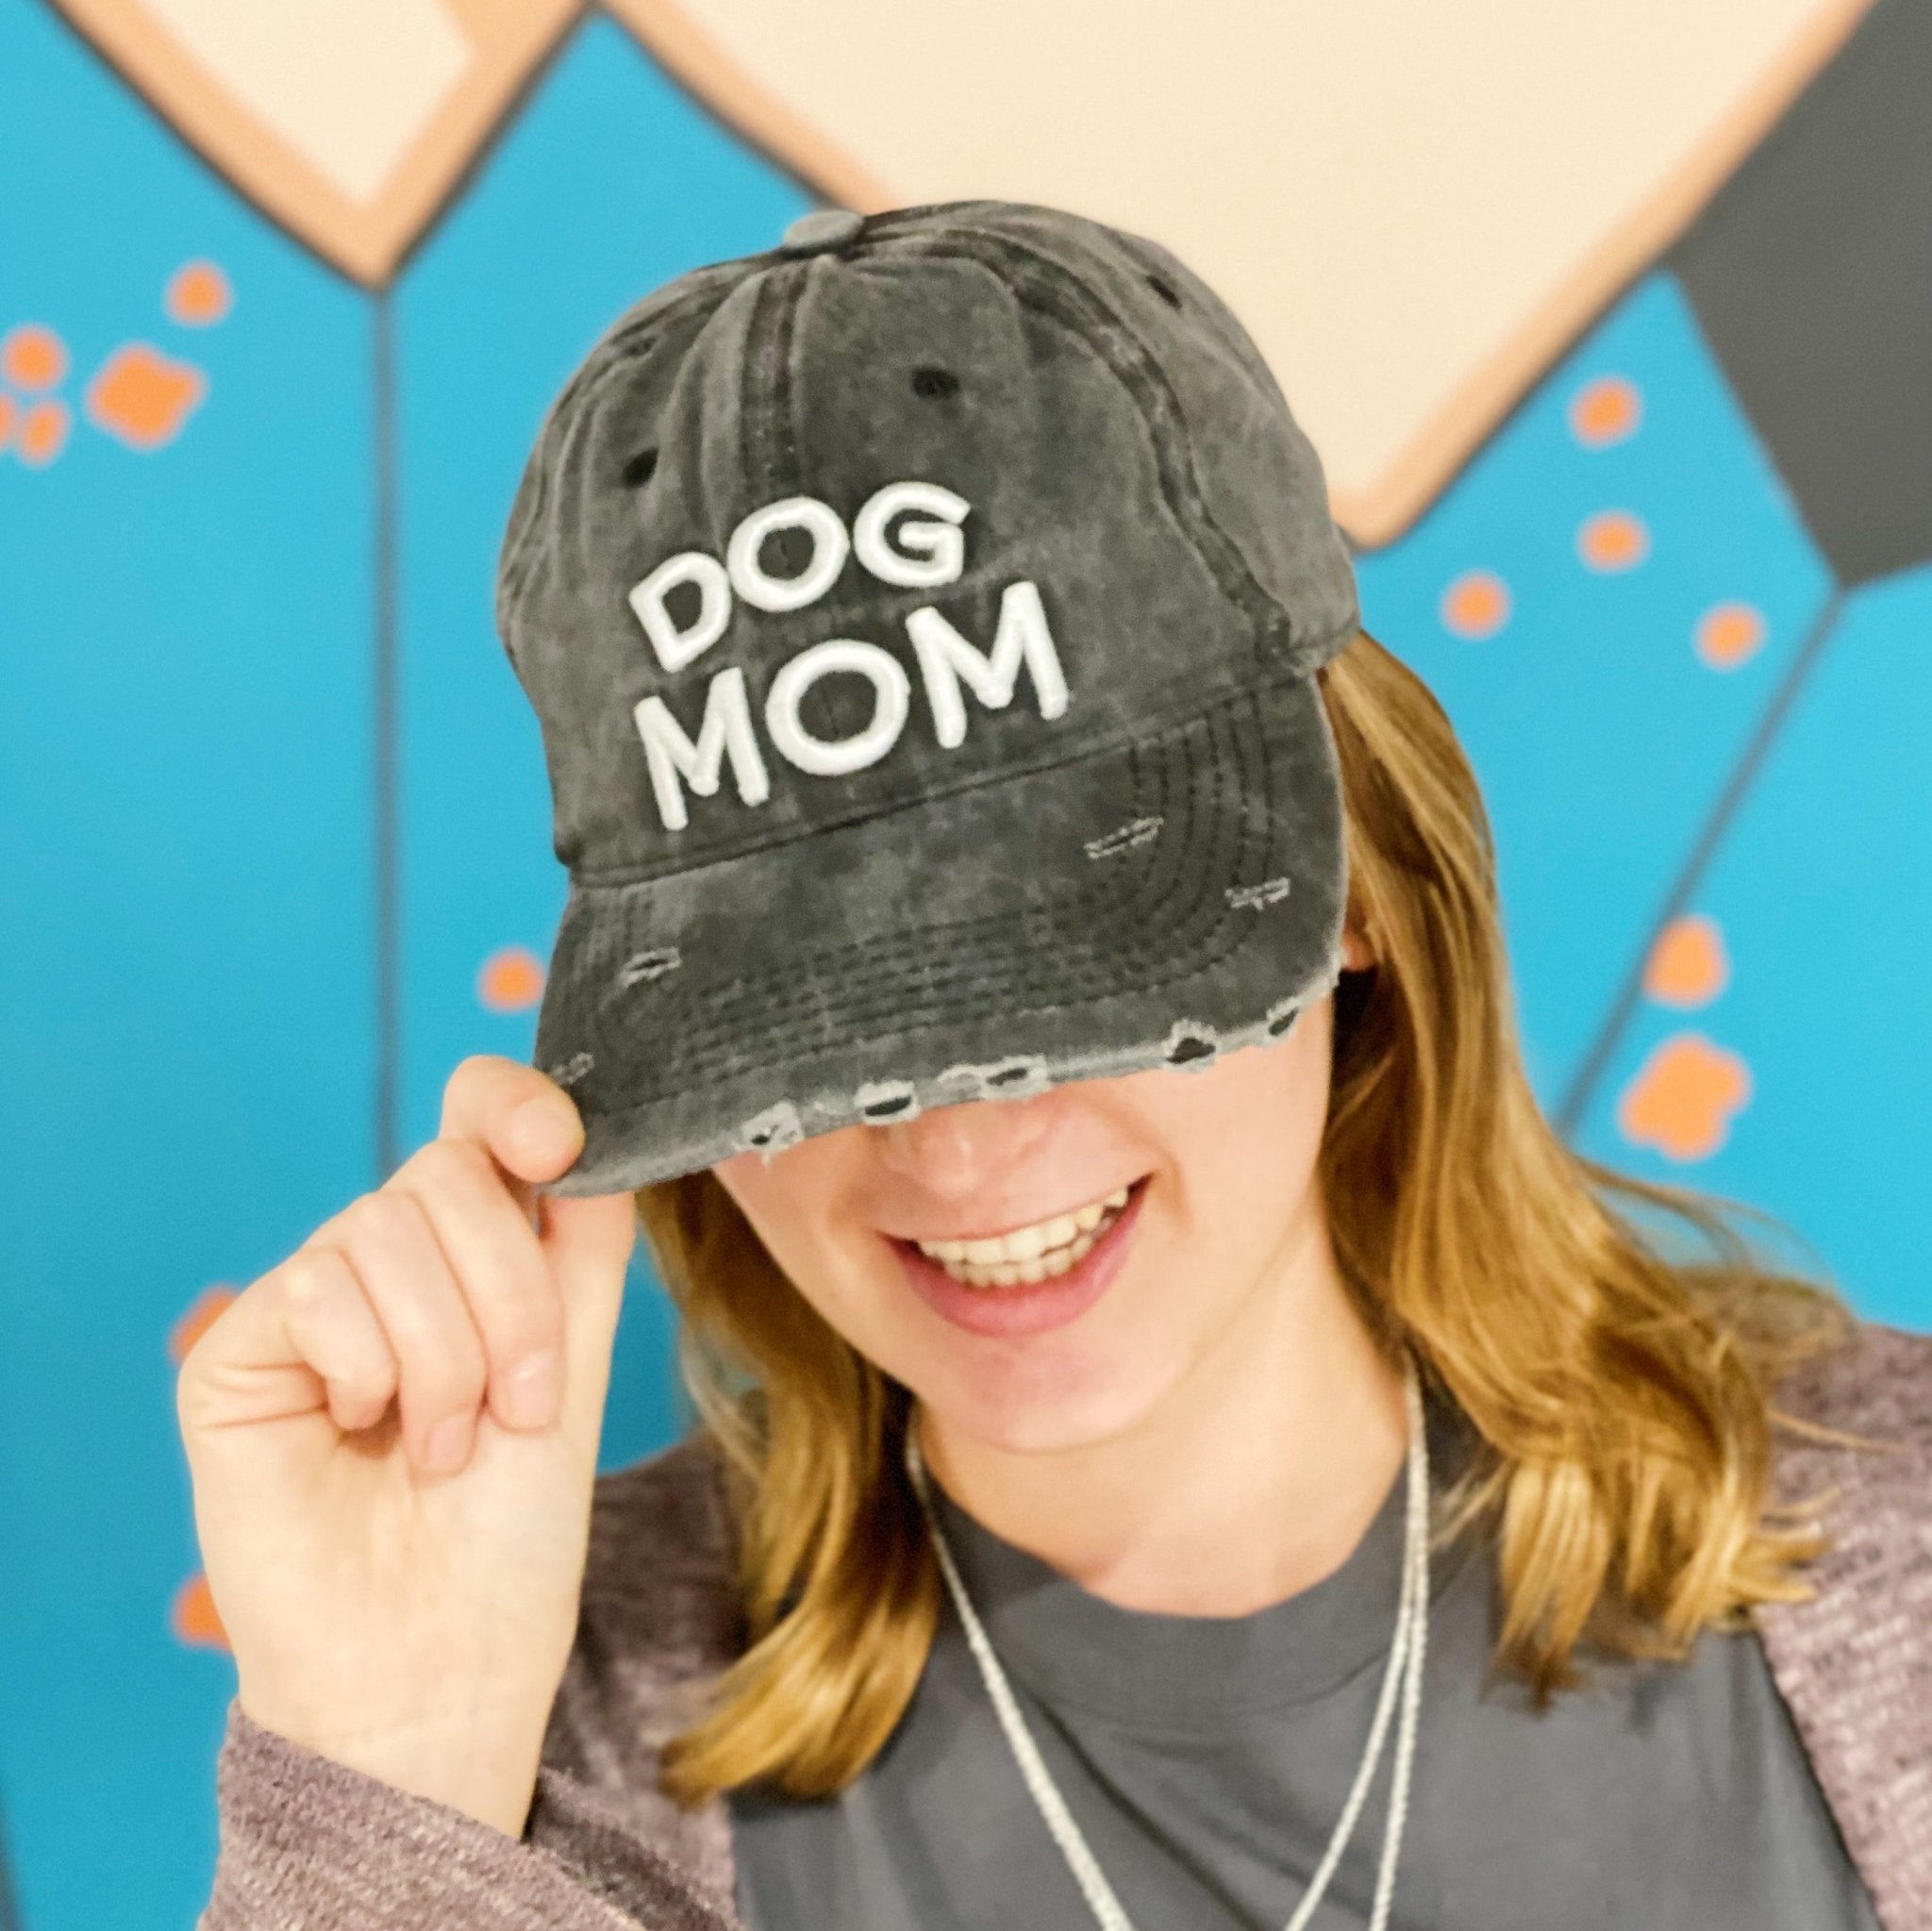 Dog Mom Distressed Baseball Cap - The Kindness Cause